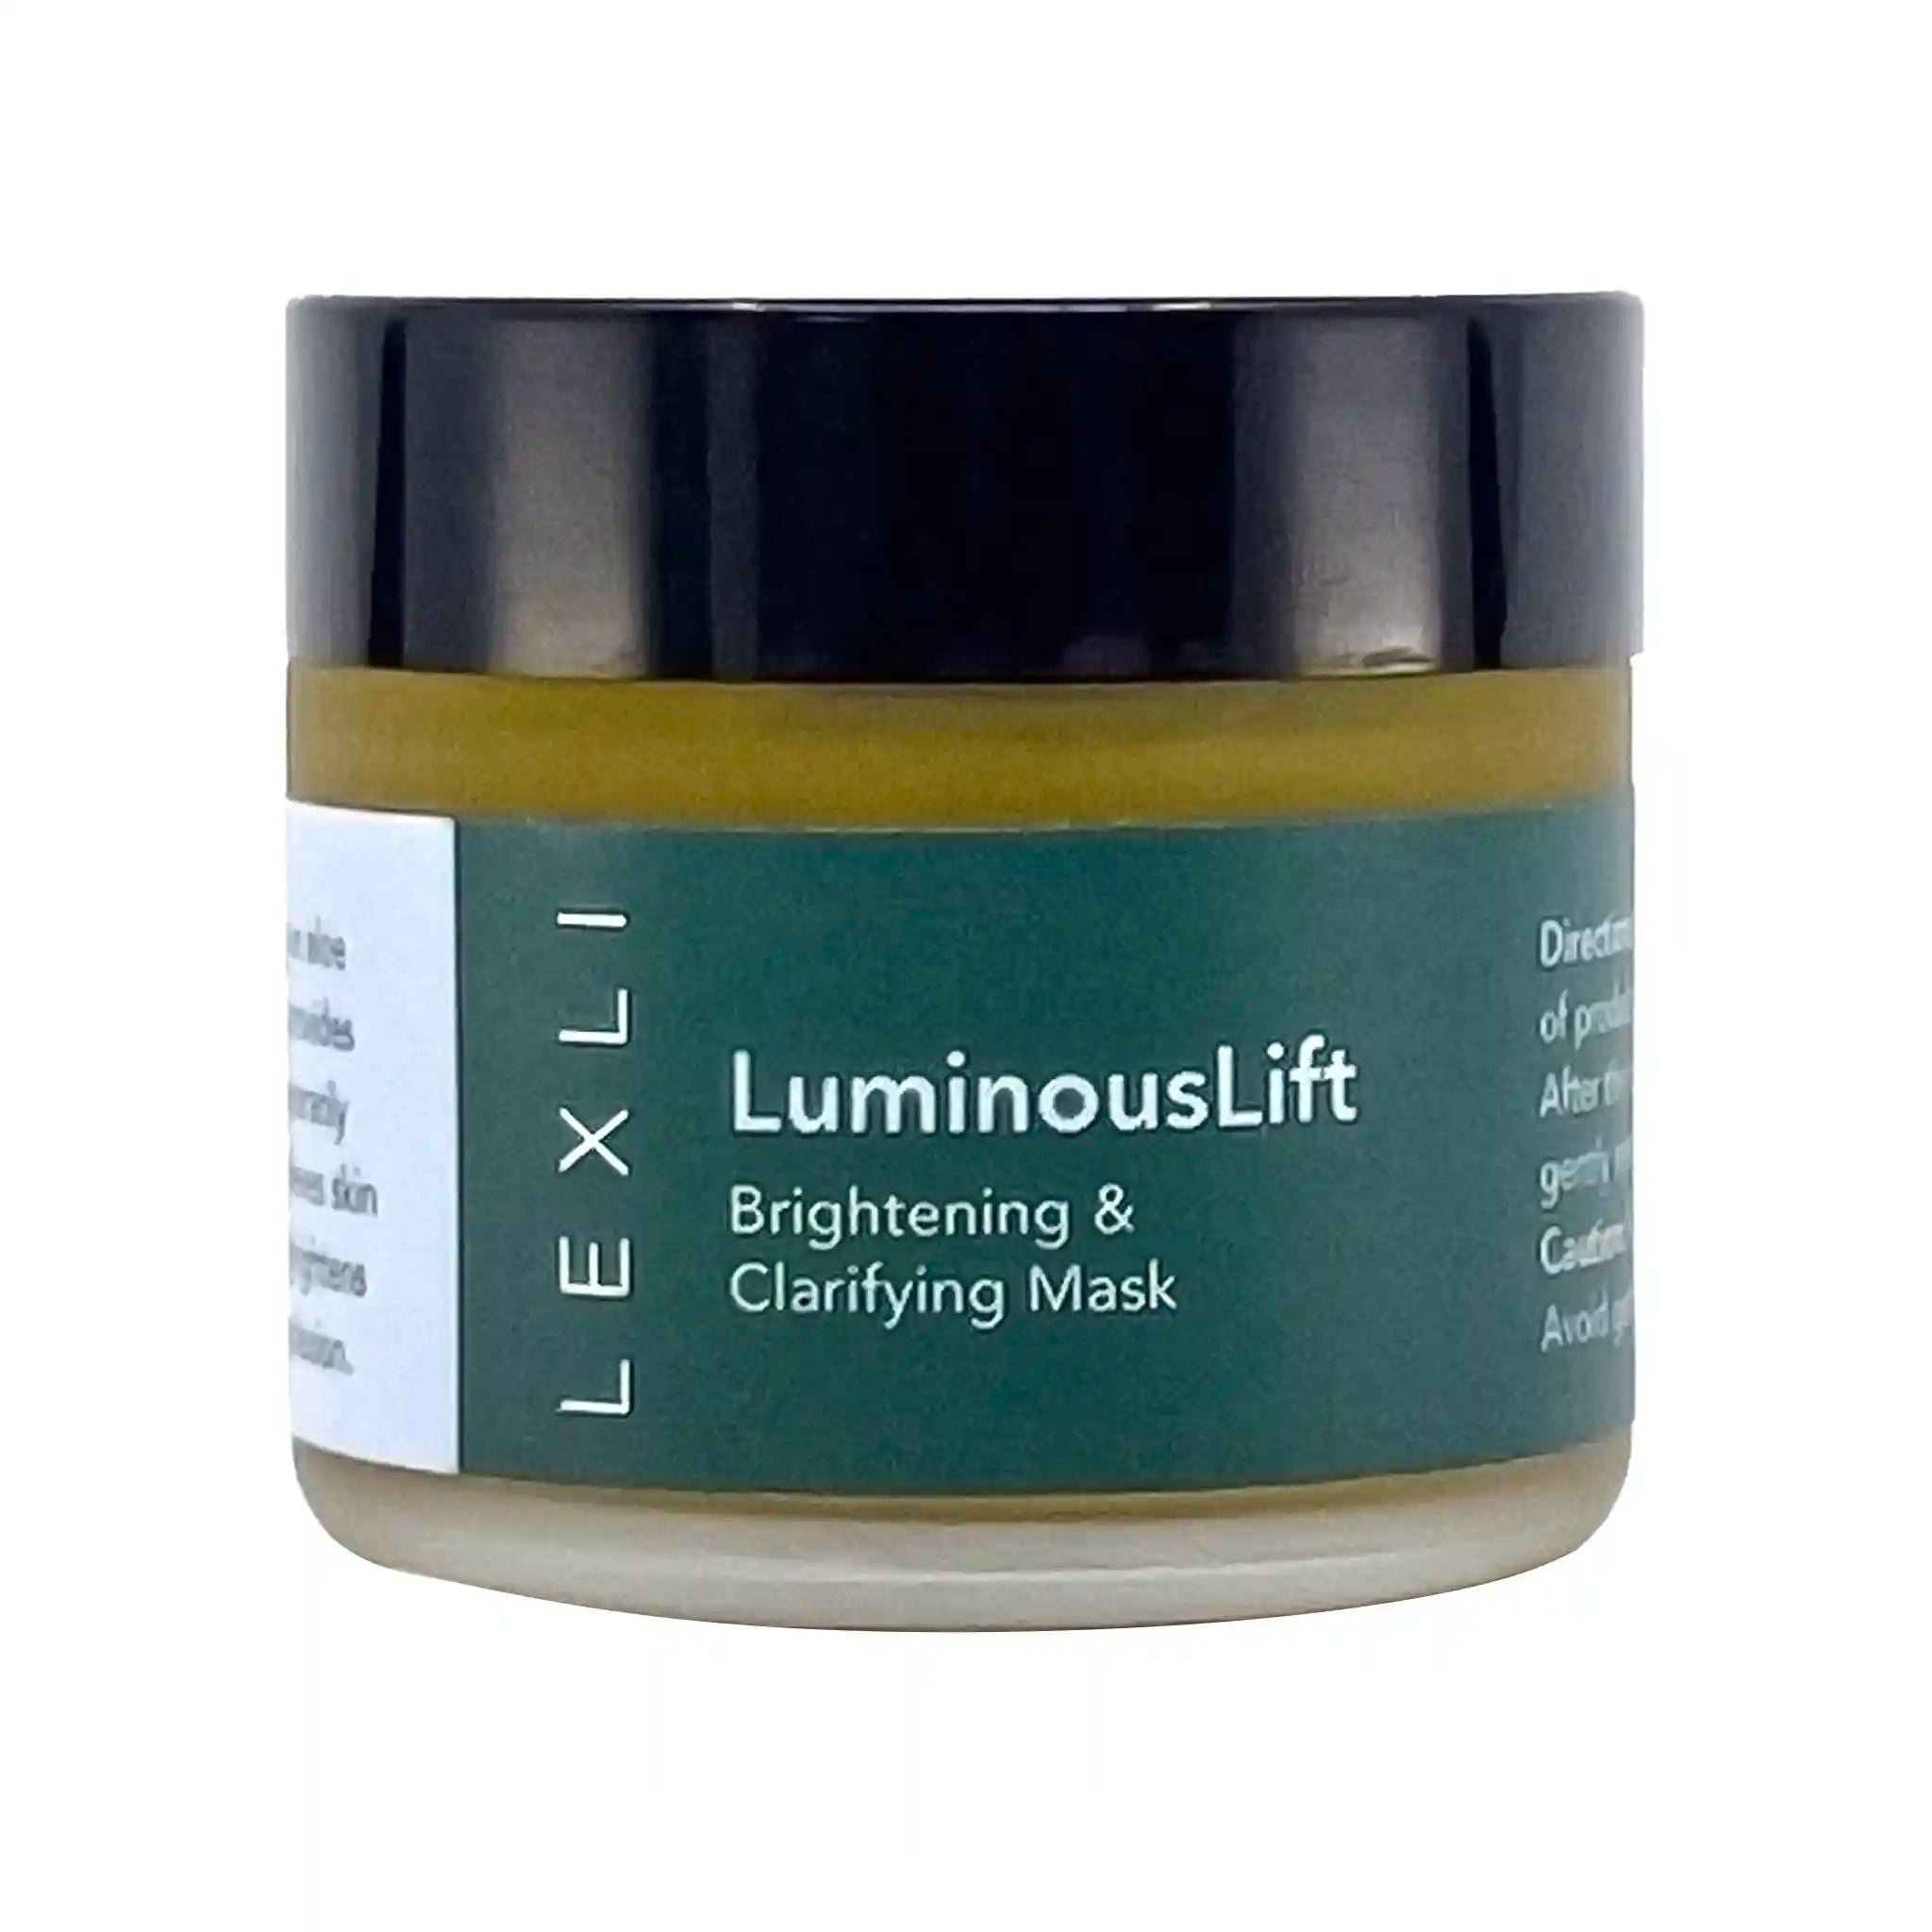 2 oz jar with green lable, LuminousLift